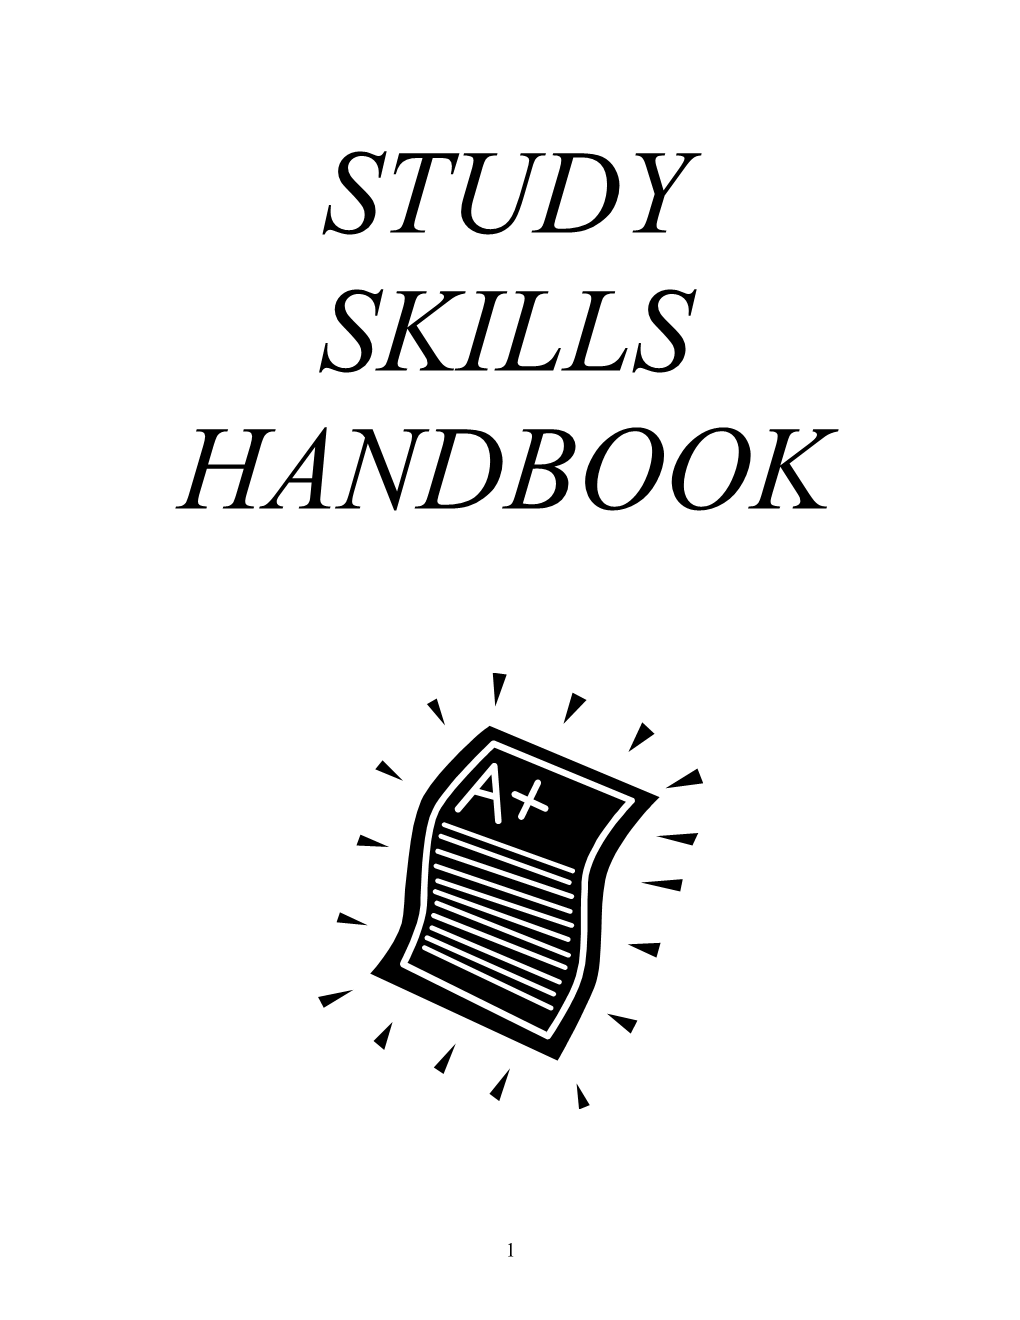 Prepare to Learn/Study